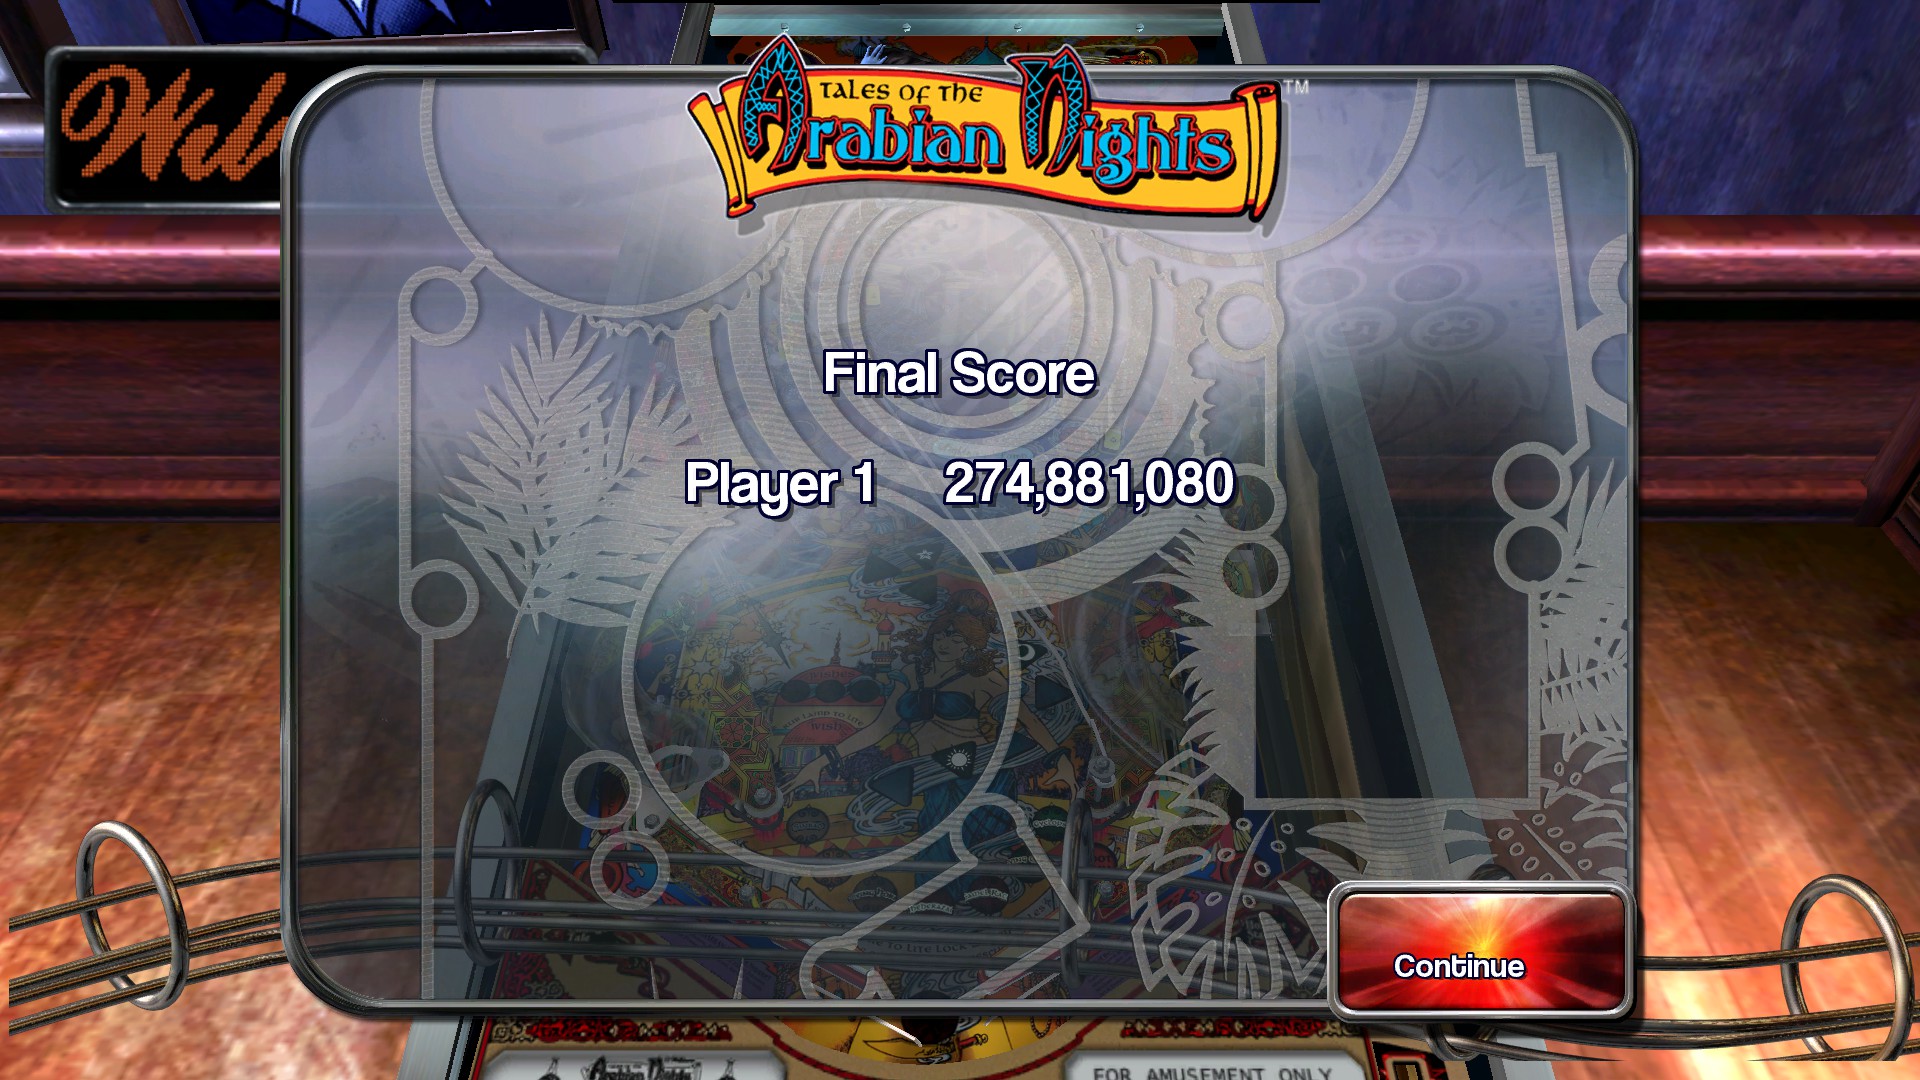 TheTrickster: Pinball Arcade: Arabian Knights (PC) 274,881,080 points on 2015-11-24 05:48:50